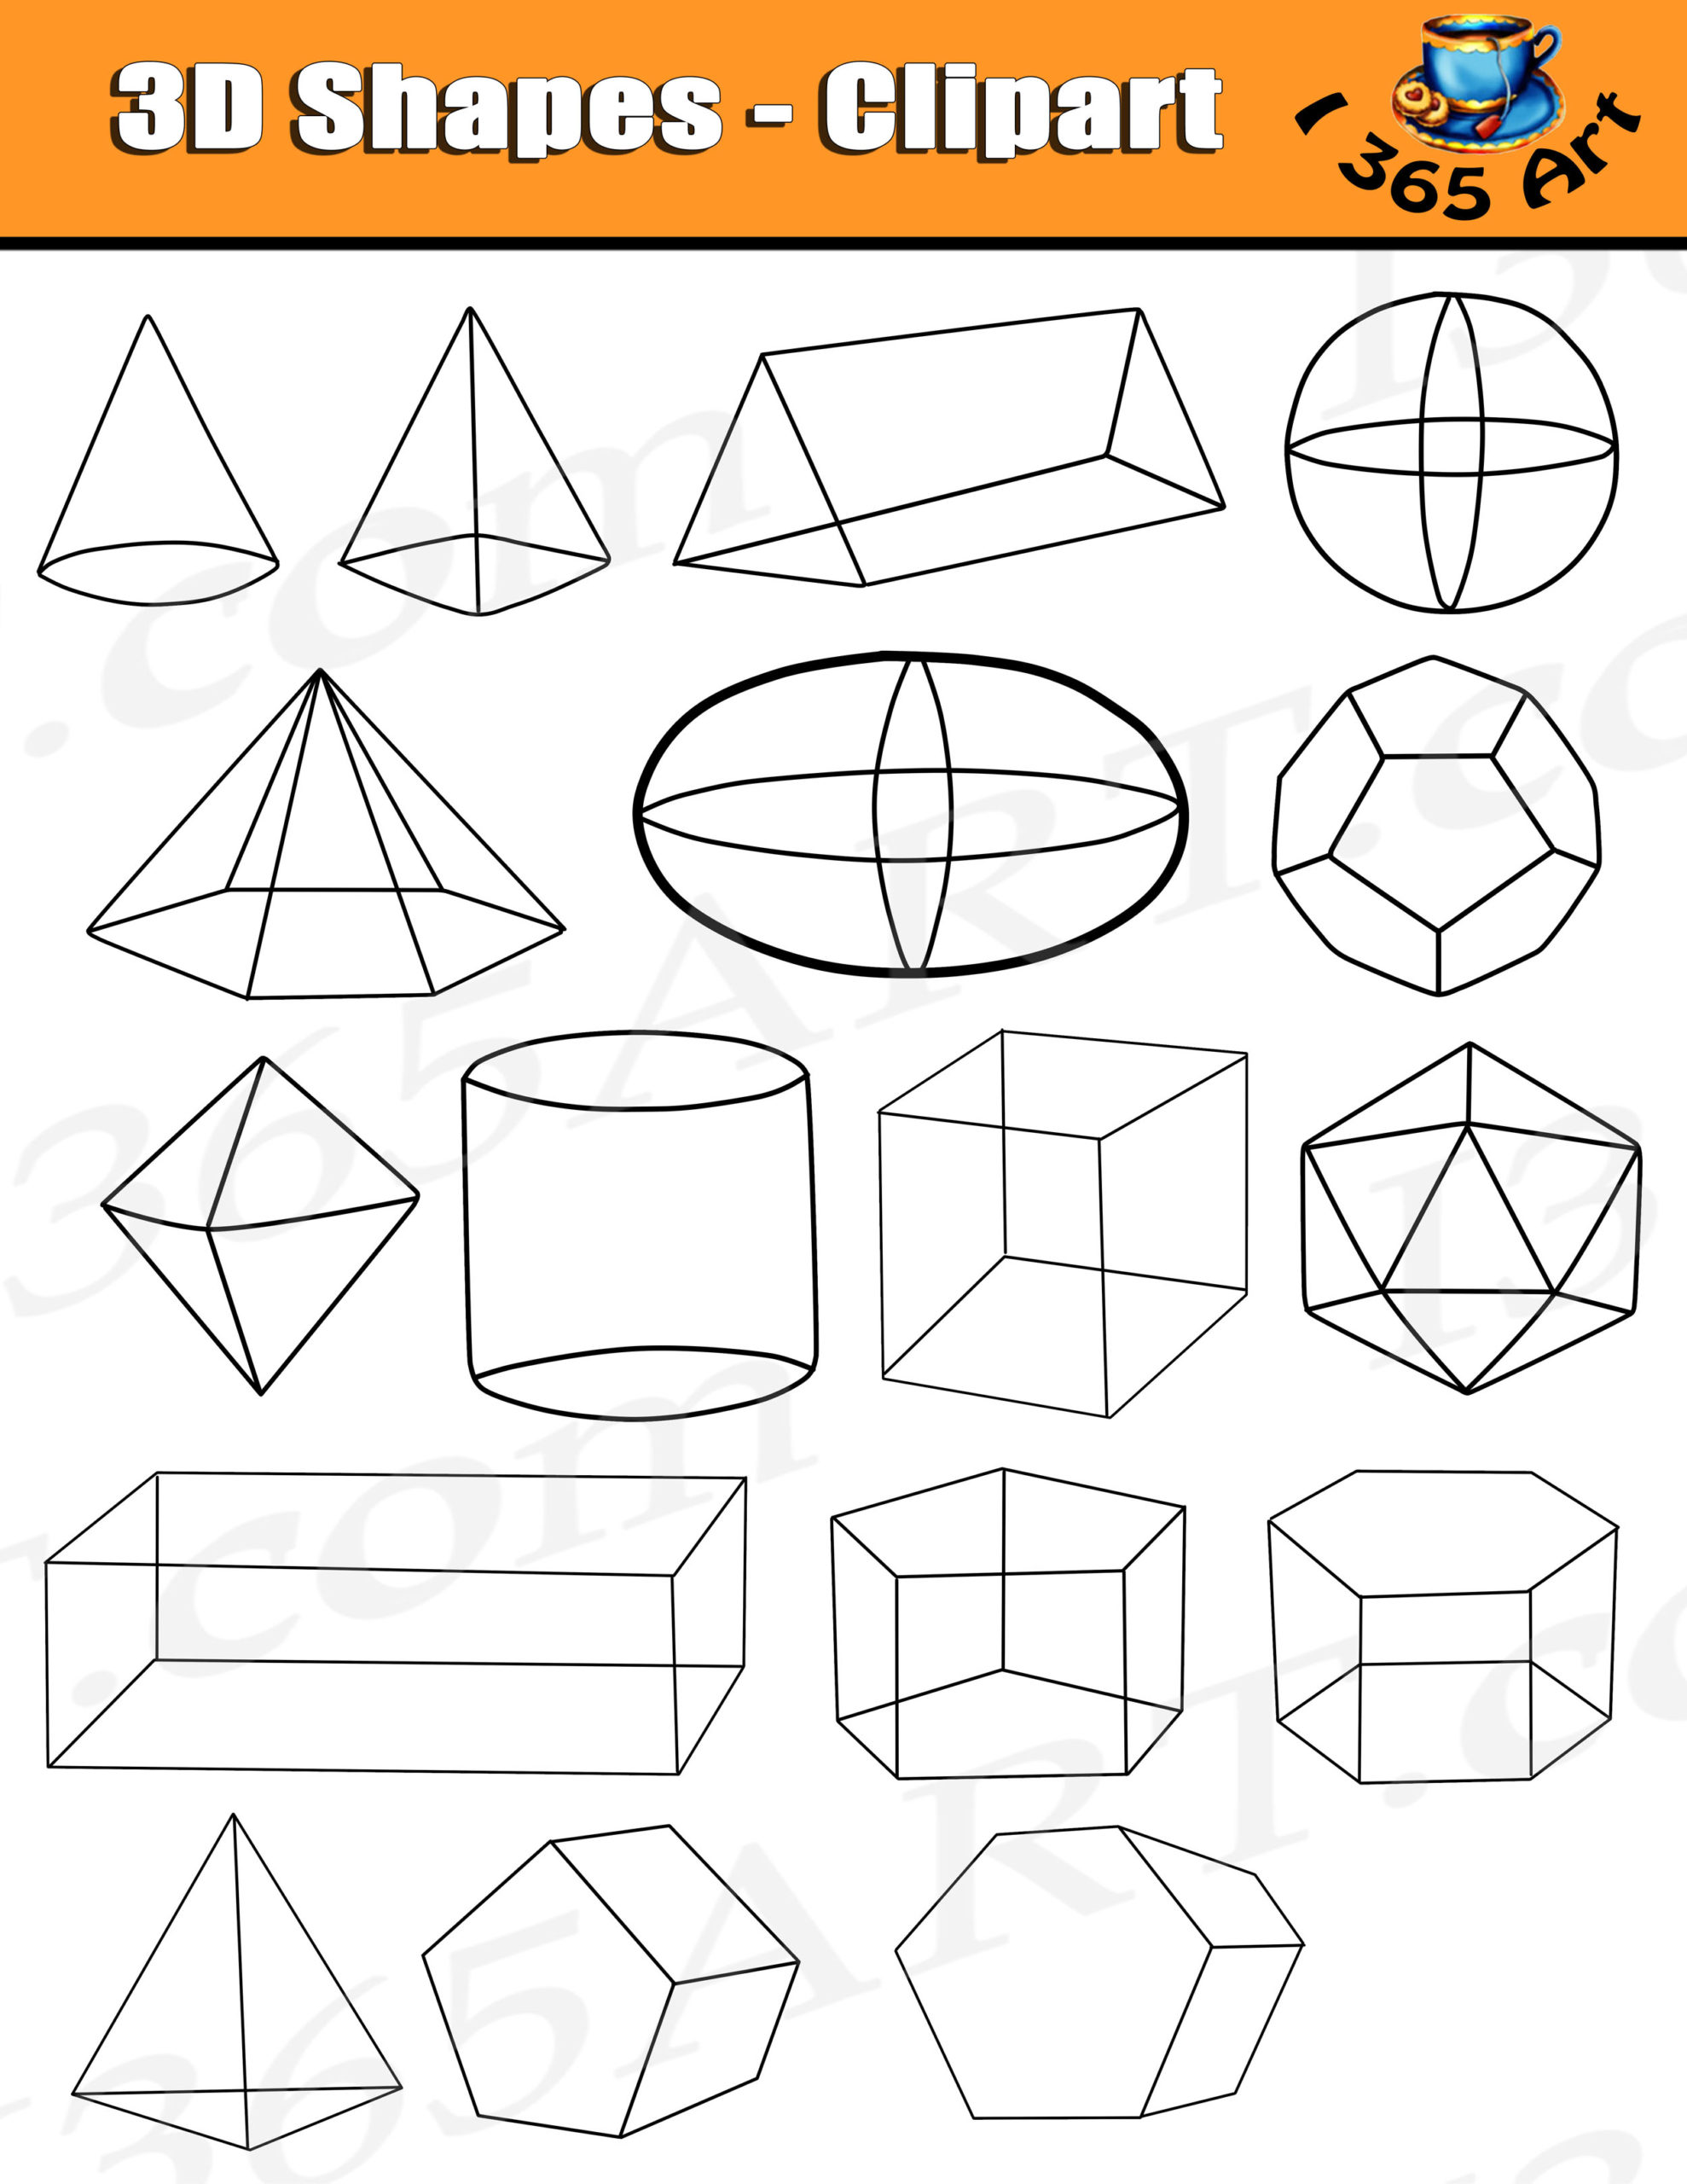 3 d shapes